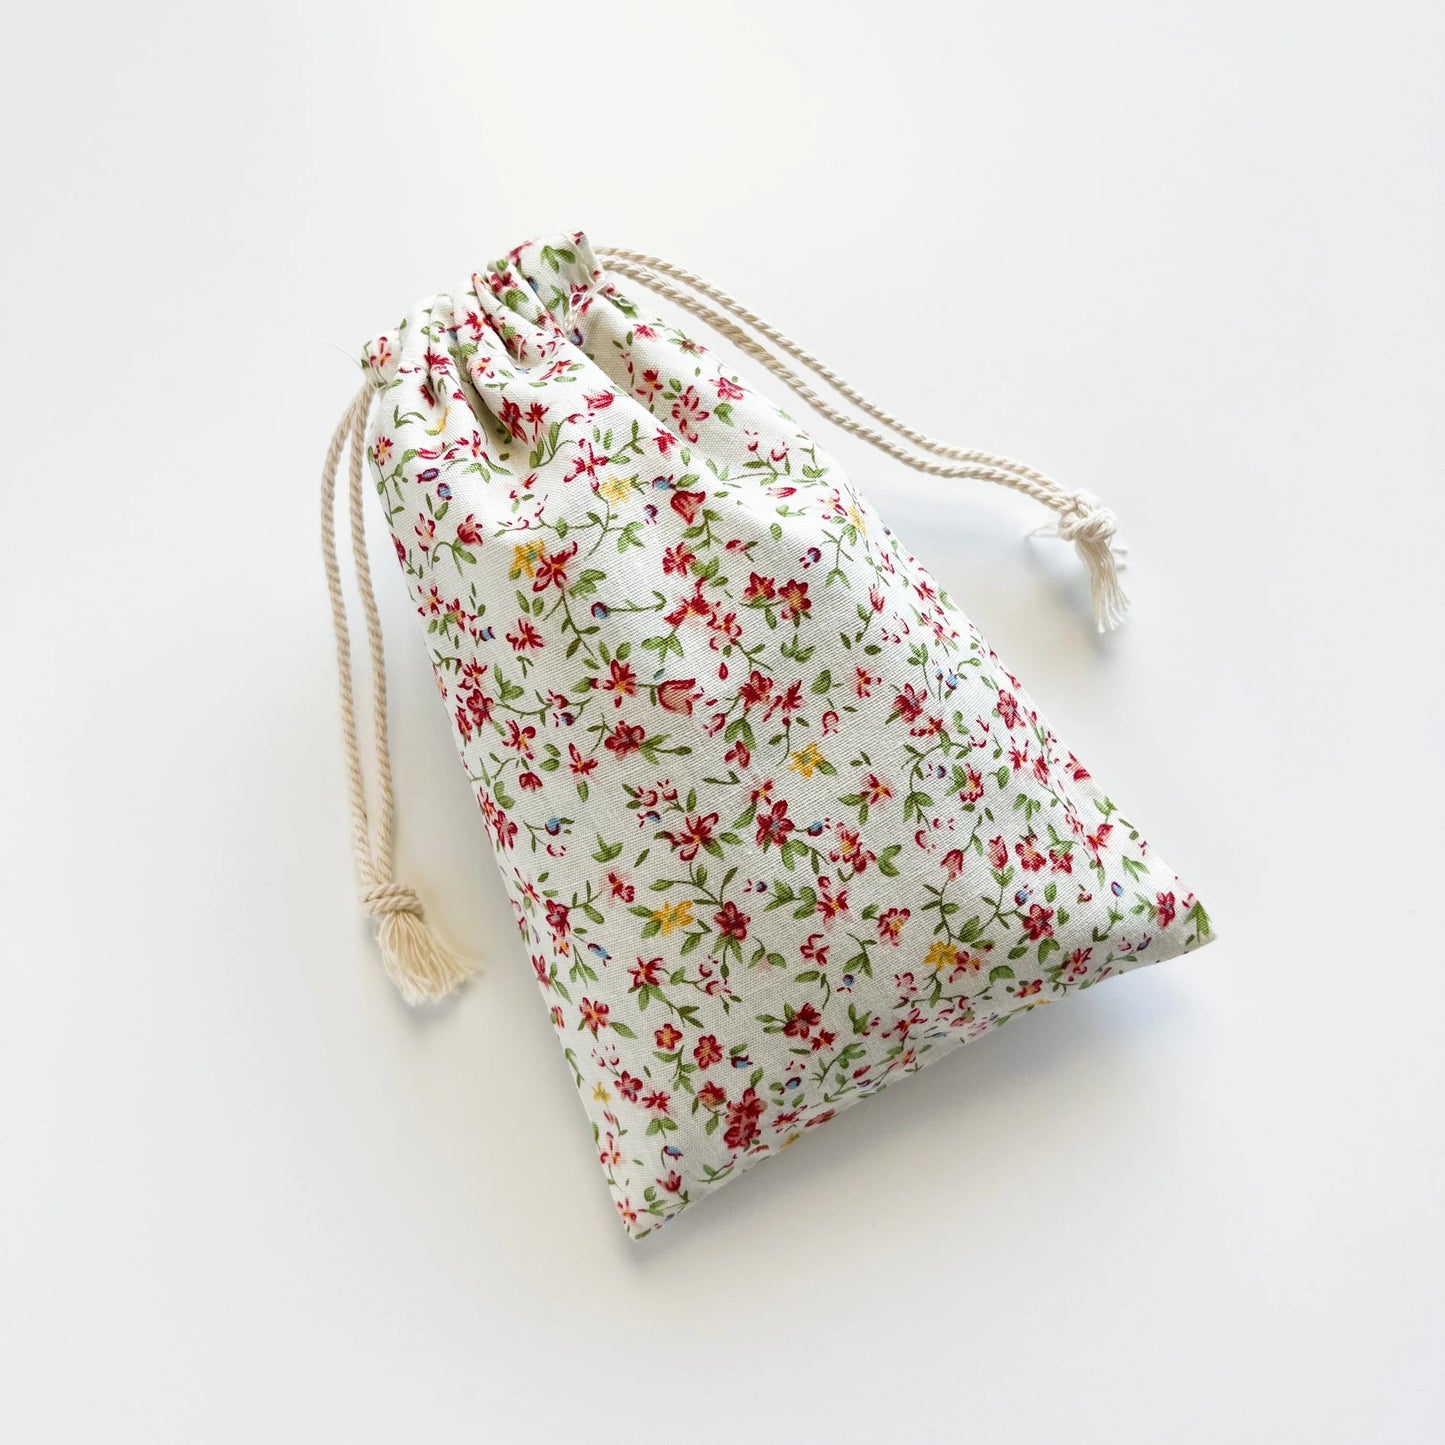 dried lavender sachet, floral fabric drawstring bag